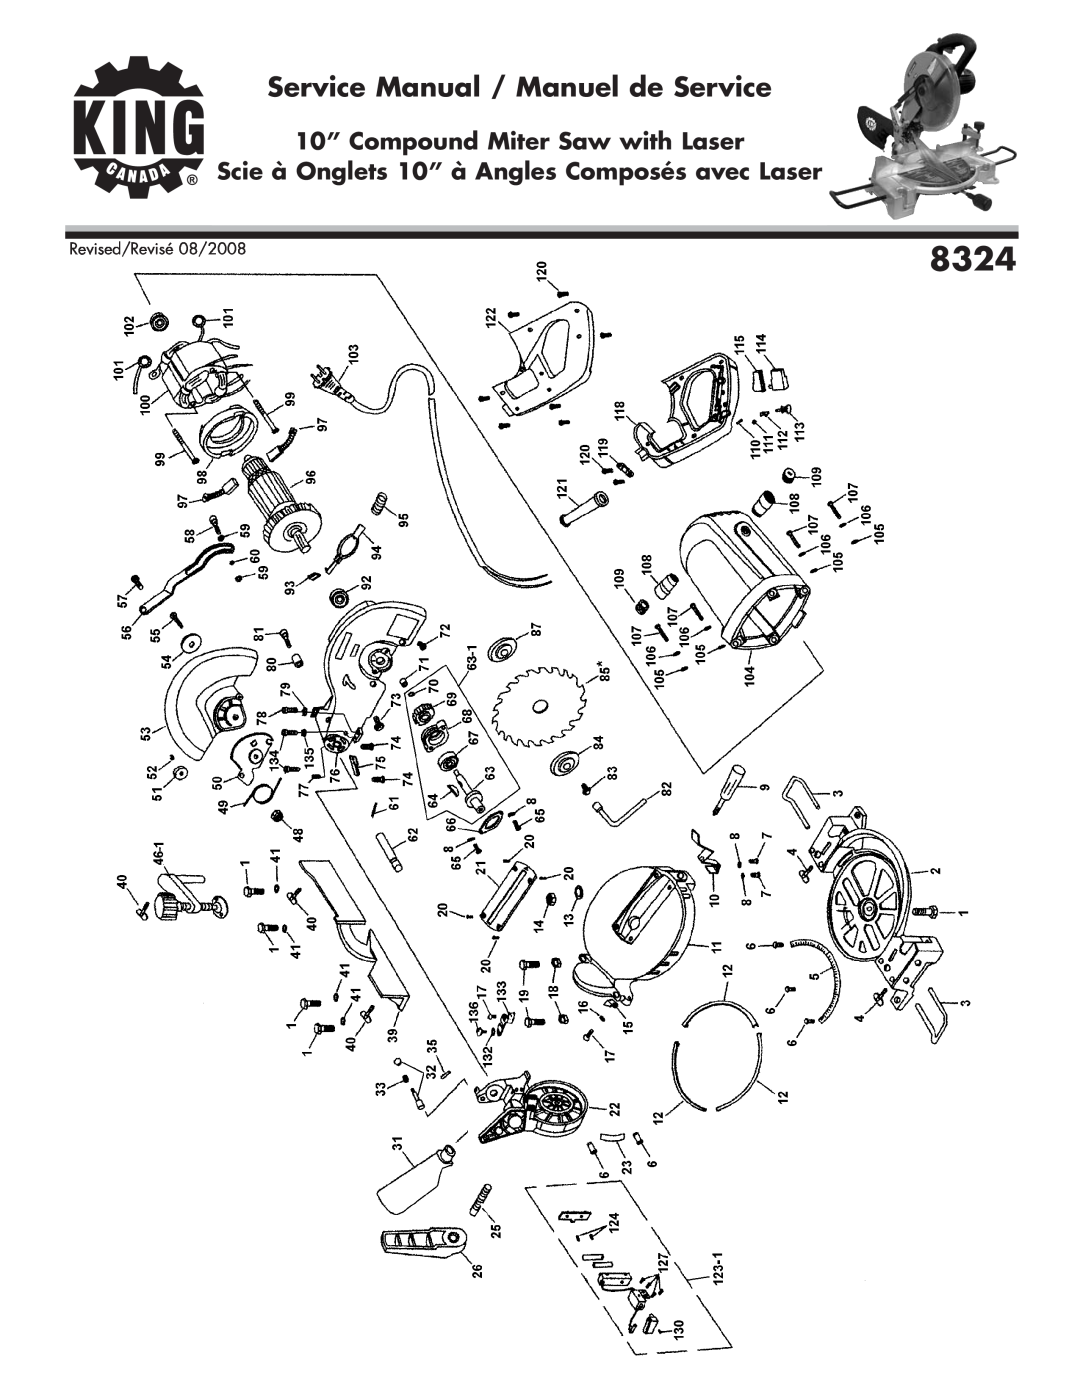 King Canada 8324 service manual Service Manual / Manuel de Service, 10” Compound Miter Saw with Laser 